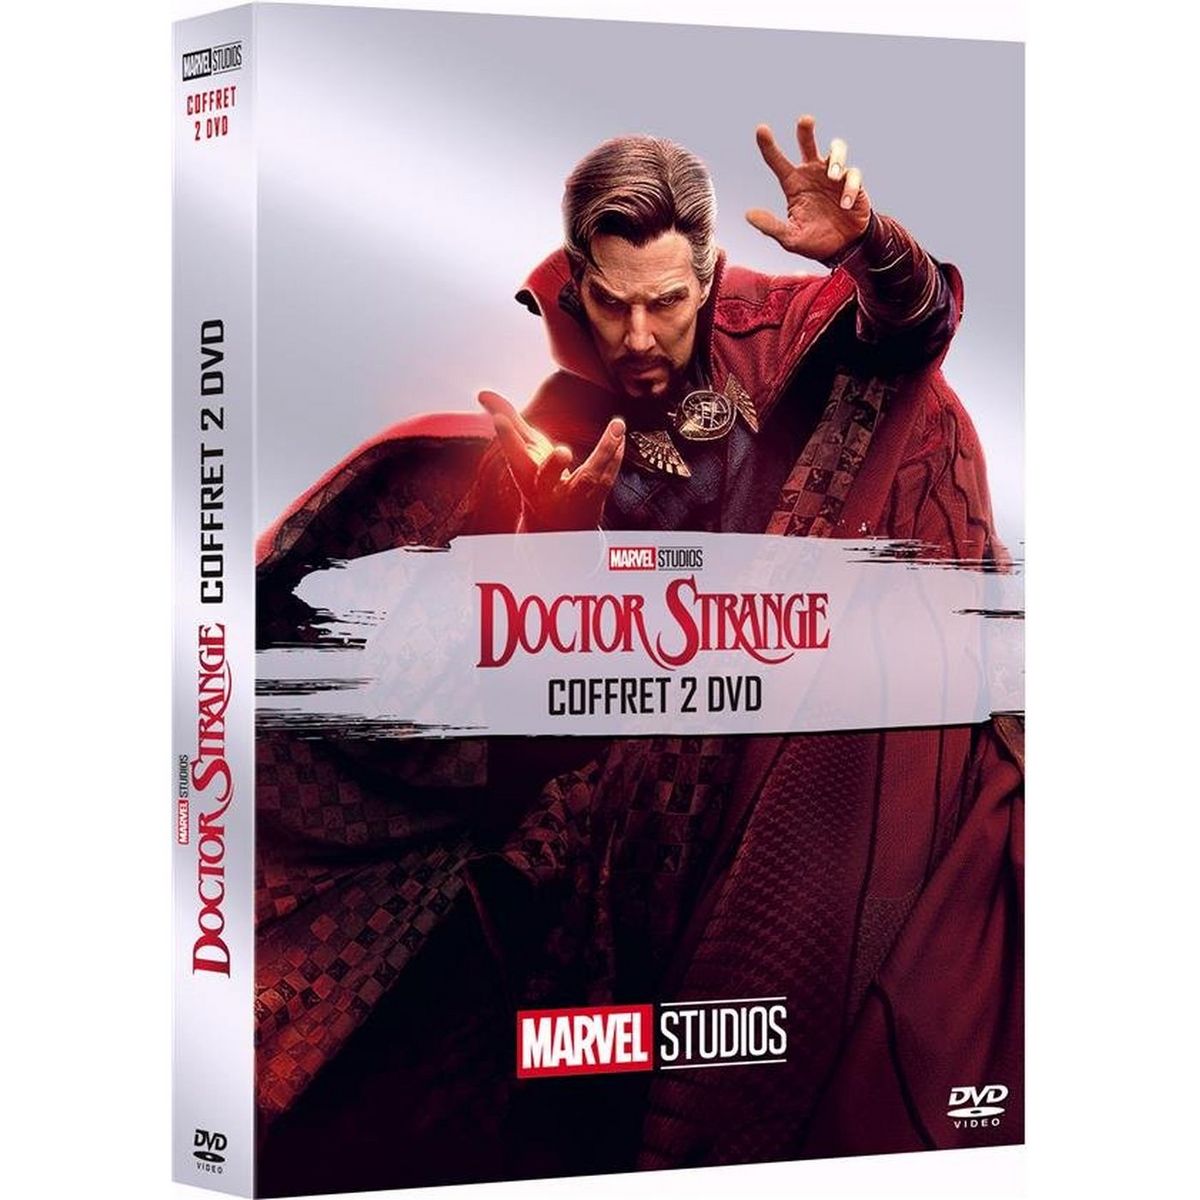 Docteur Strange + Doctor Strange in the Multiverse of Madness DVD